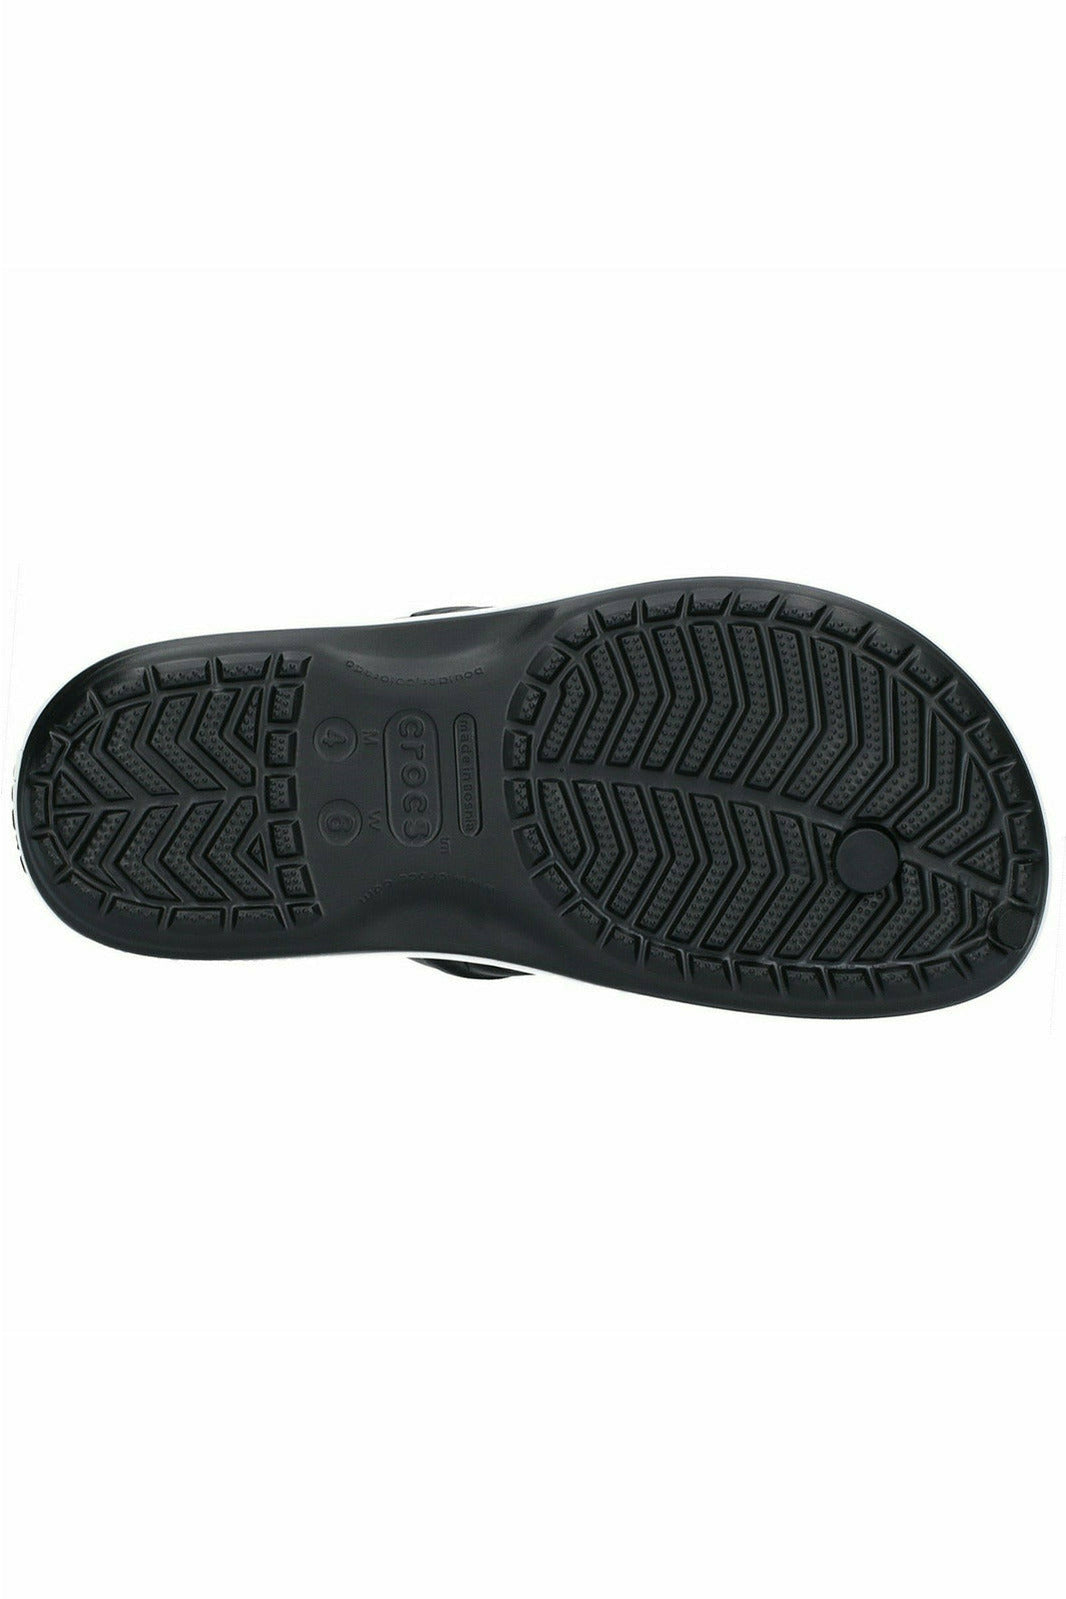 Crocs - Crocband Flip Black 11033 Unisex